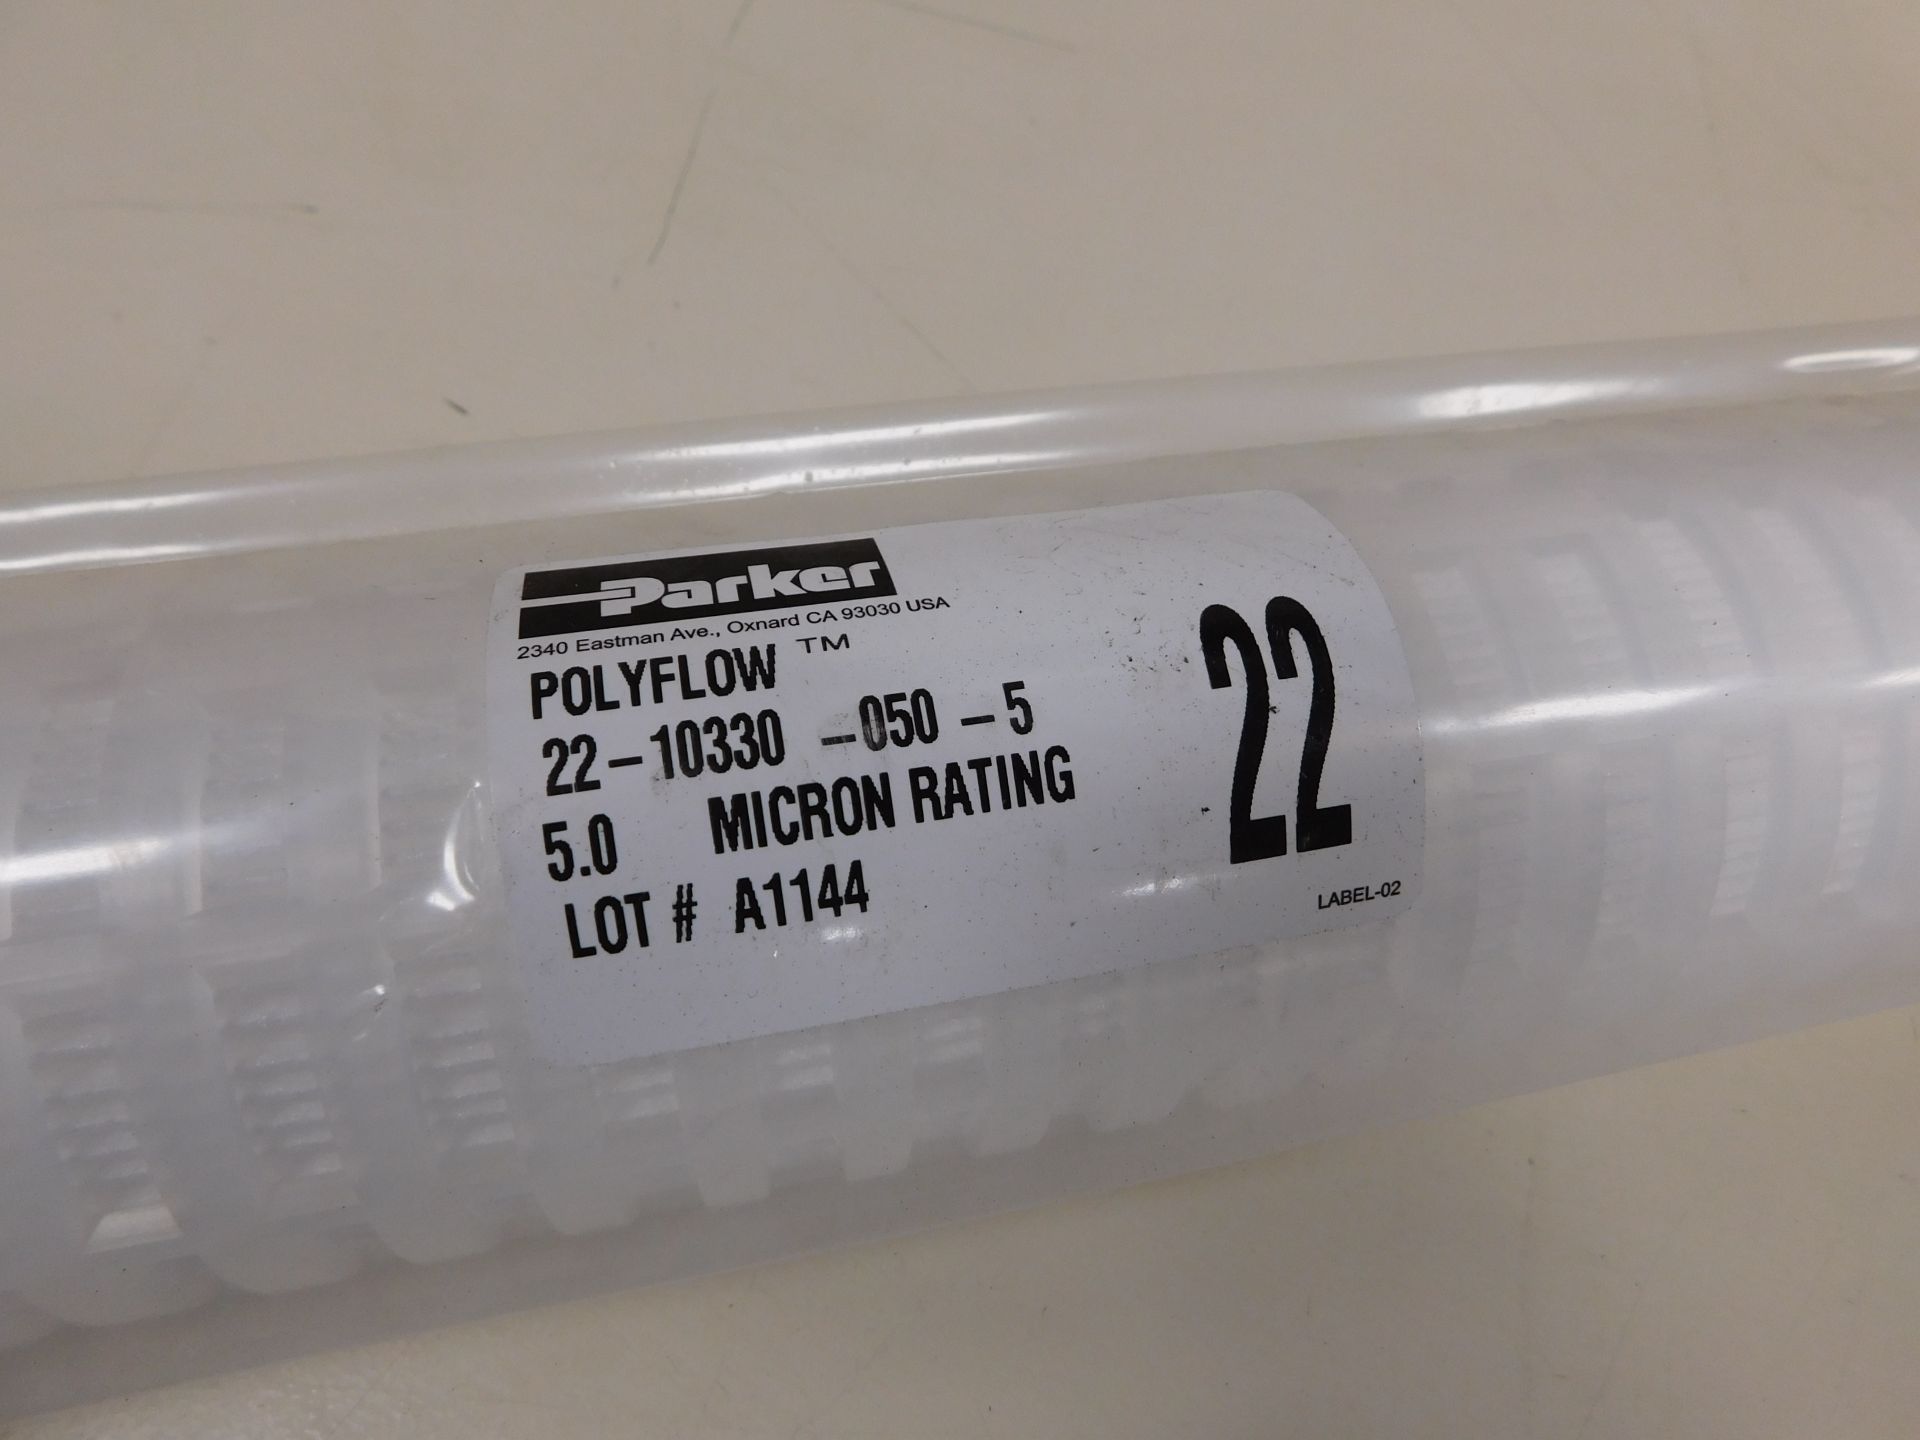 25 filter parker polyflow filter 22-10330-050-5 - Image 3 of 4